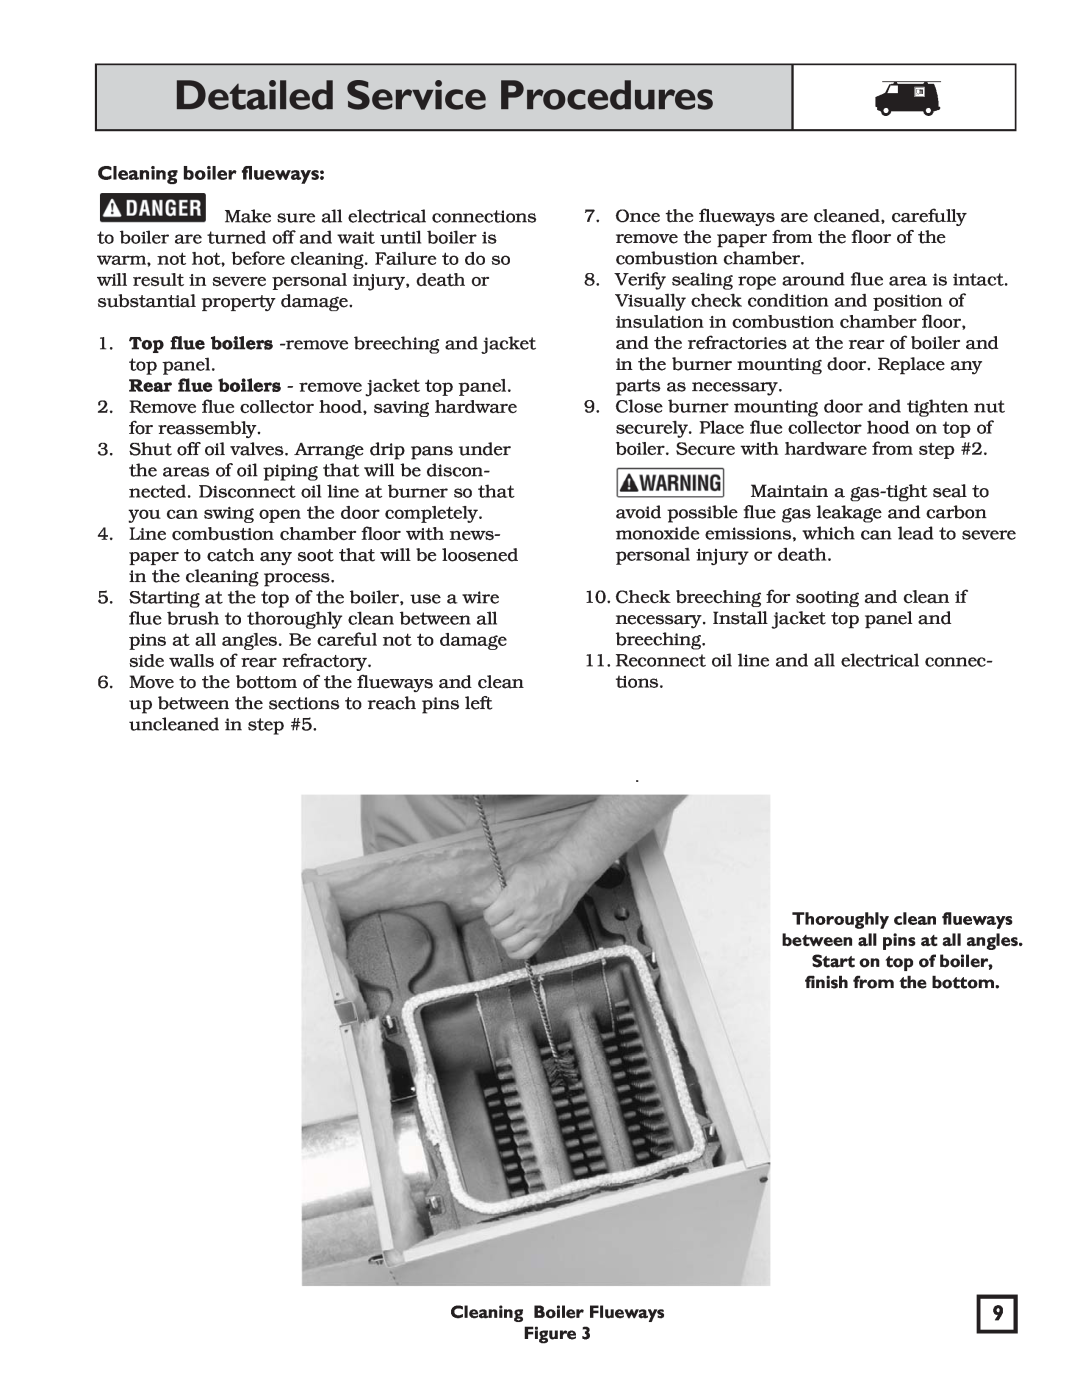 Weil-McLain WGO manual Detailed Service Procedures, Cleaning boiler flueways 